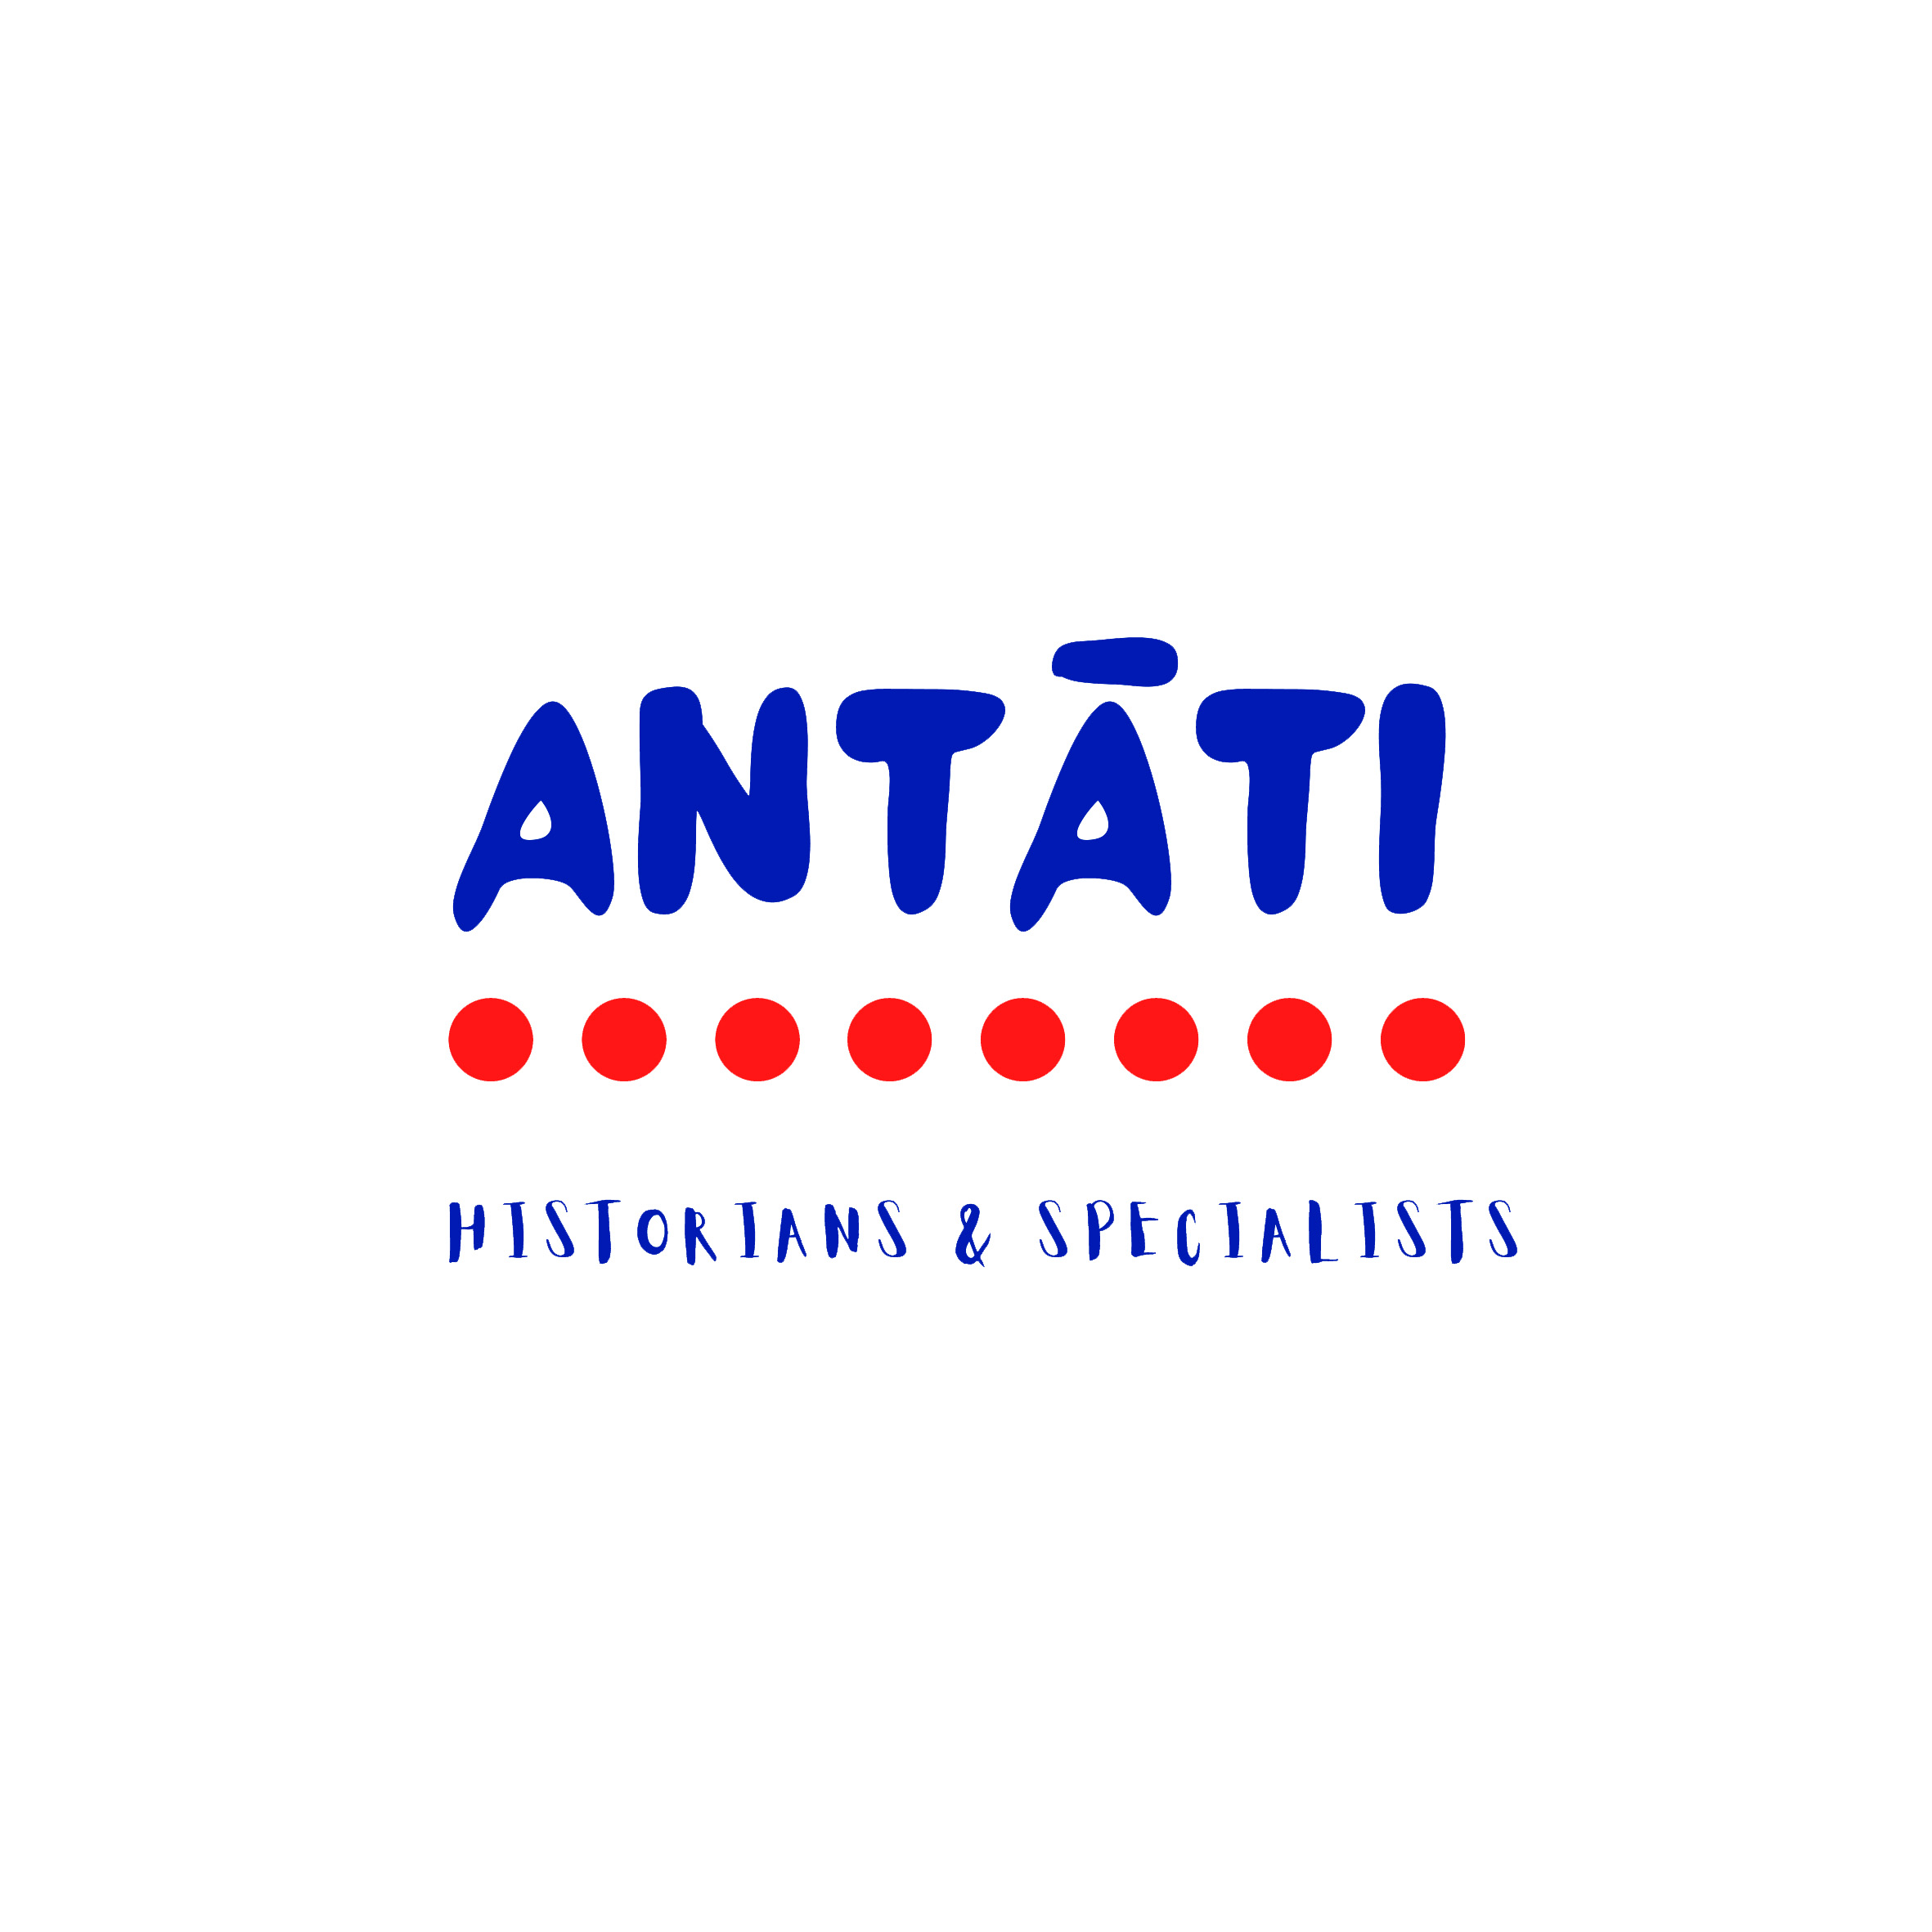 Antati Historians and Specialists